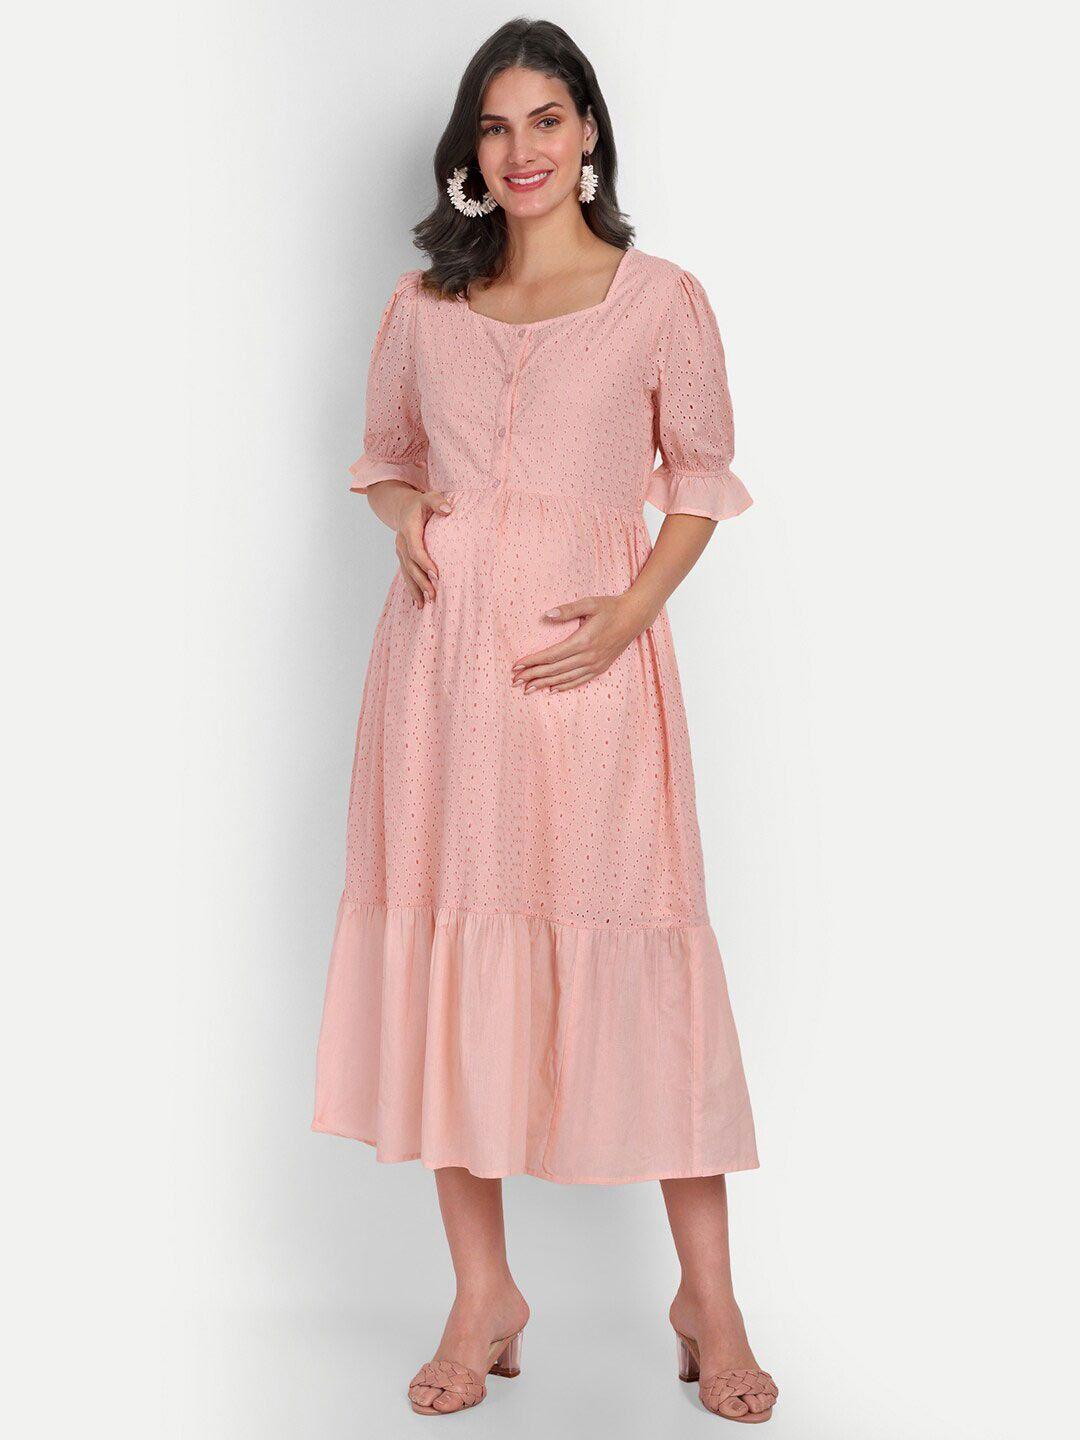 aaruvi-ruchi-verma-bell-sleeve-fit-&-flare-midi-cotton-dress